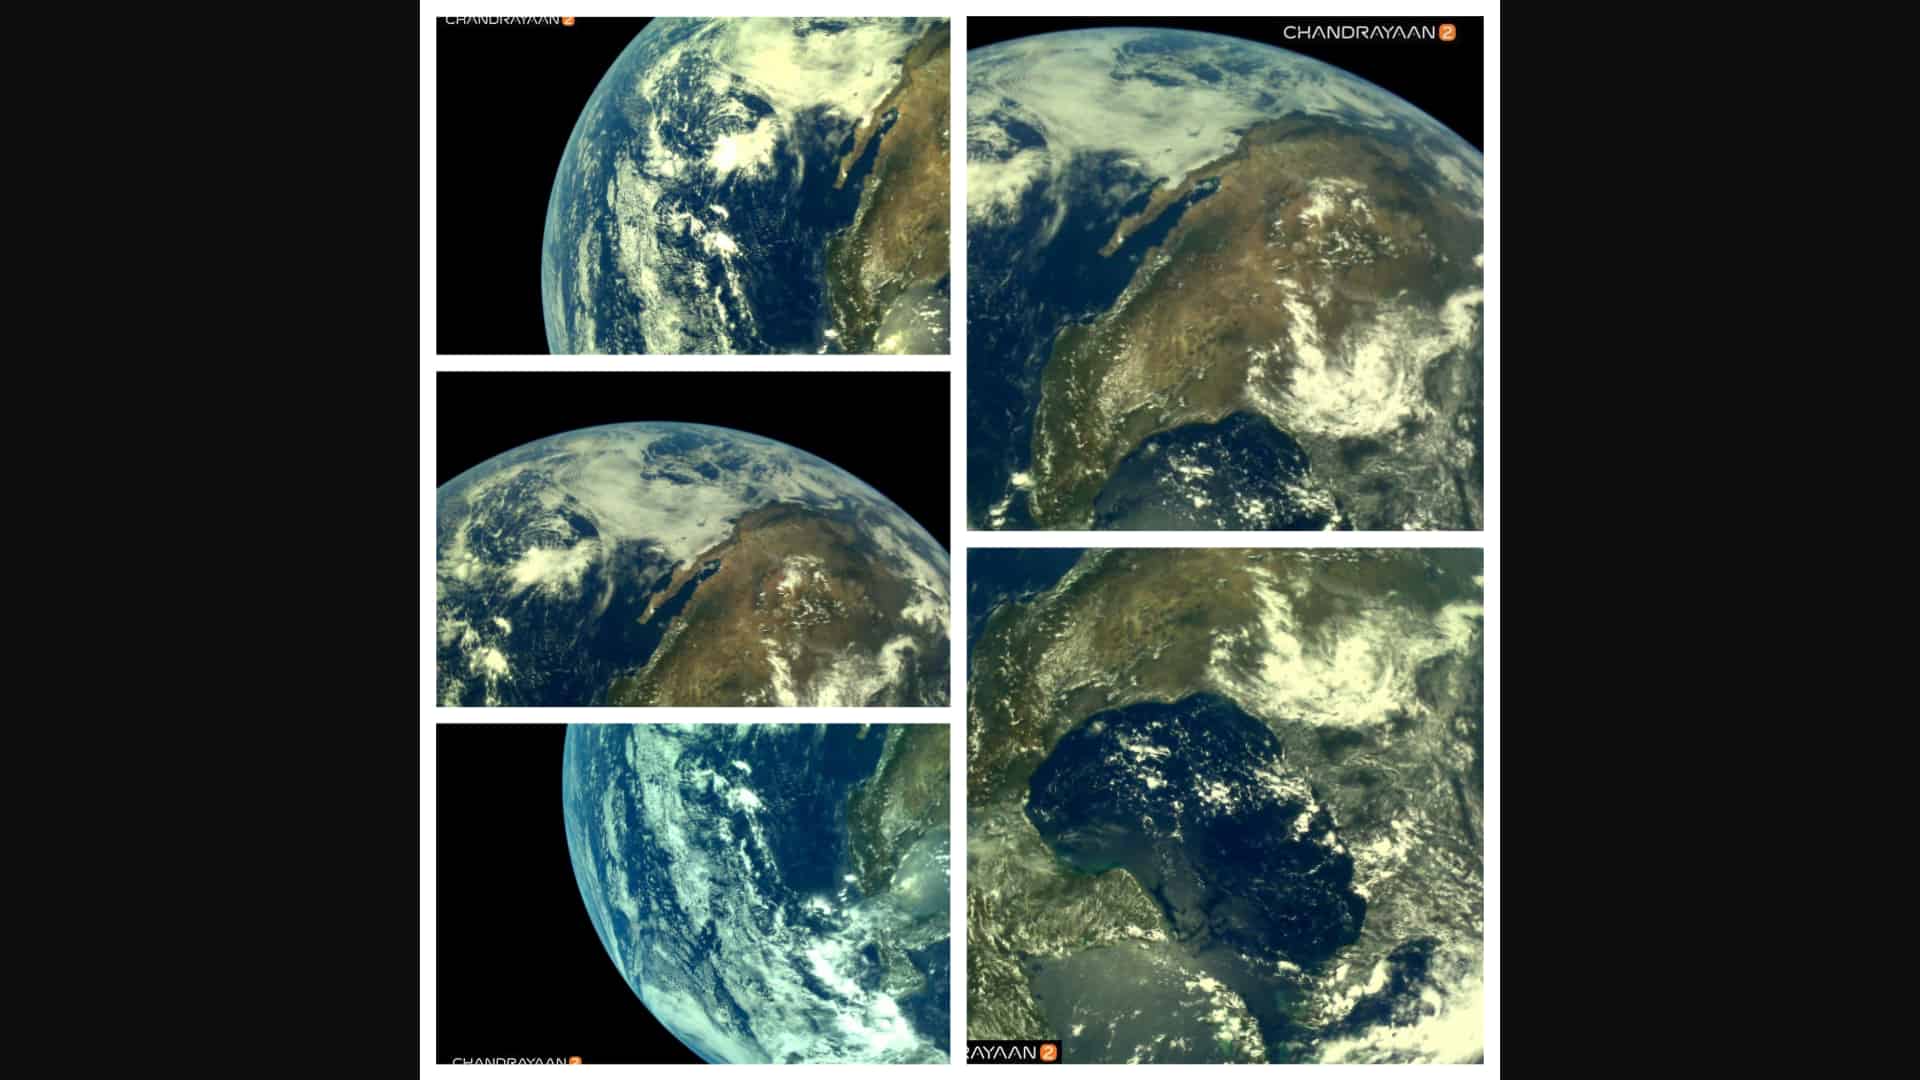 how earth looks like from chandrayaan 2